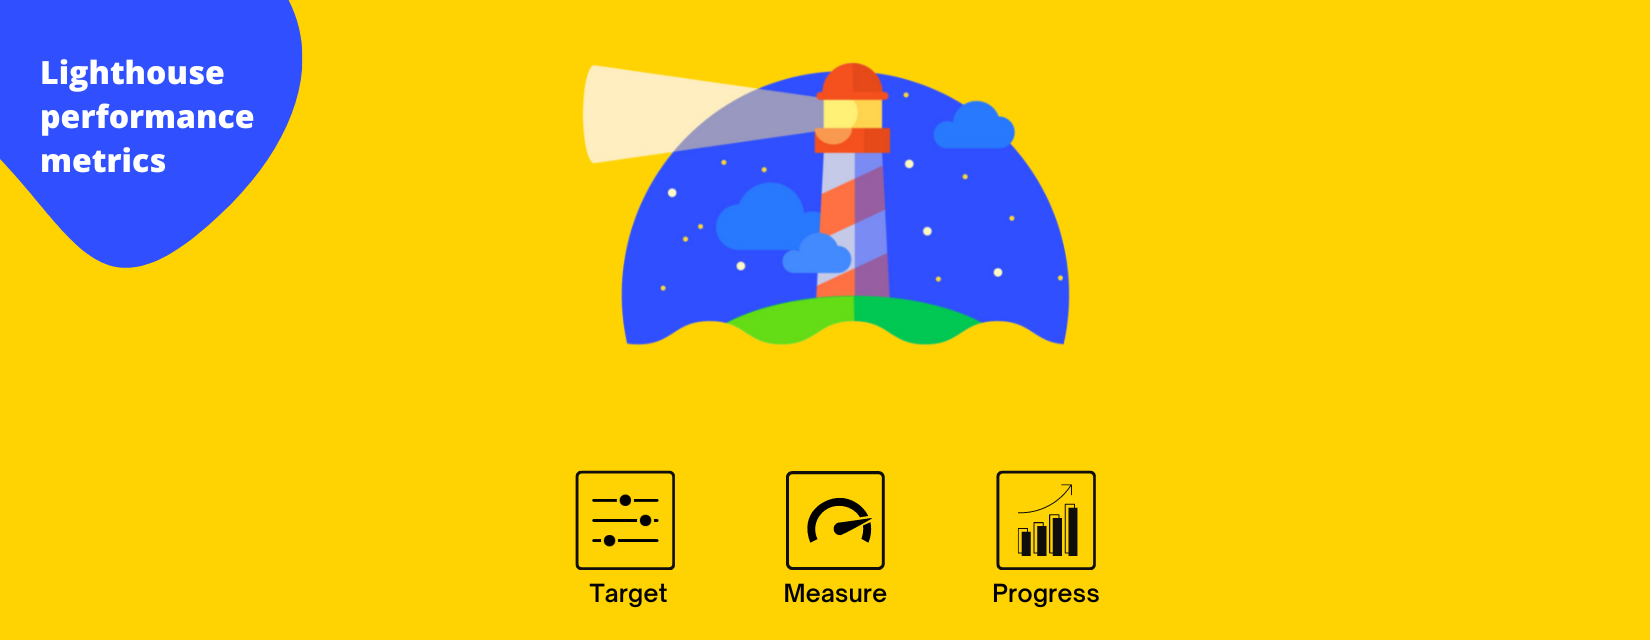 Lighthouse performance metrics visualization